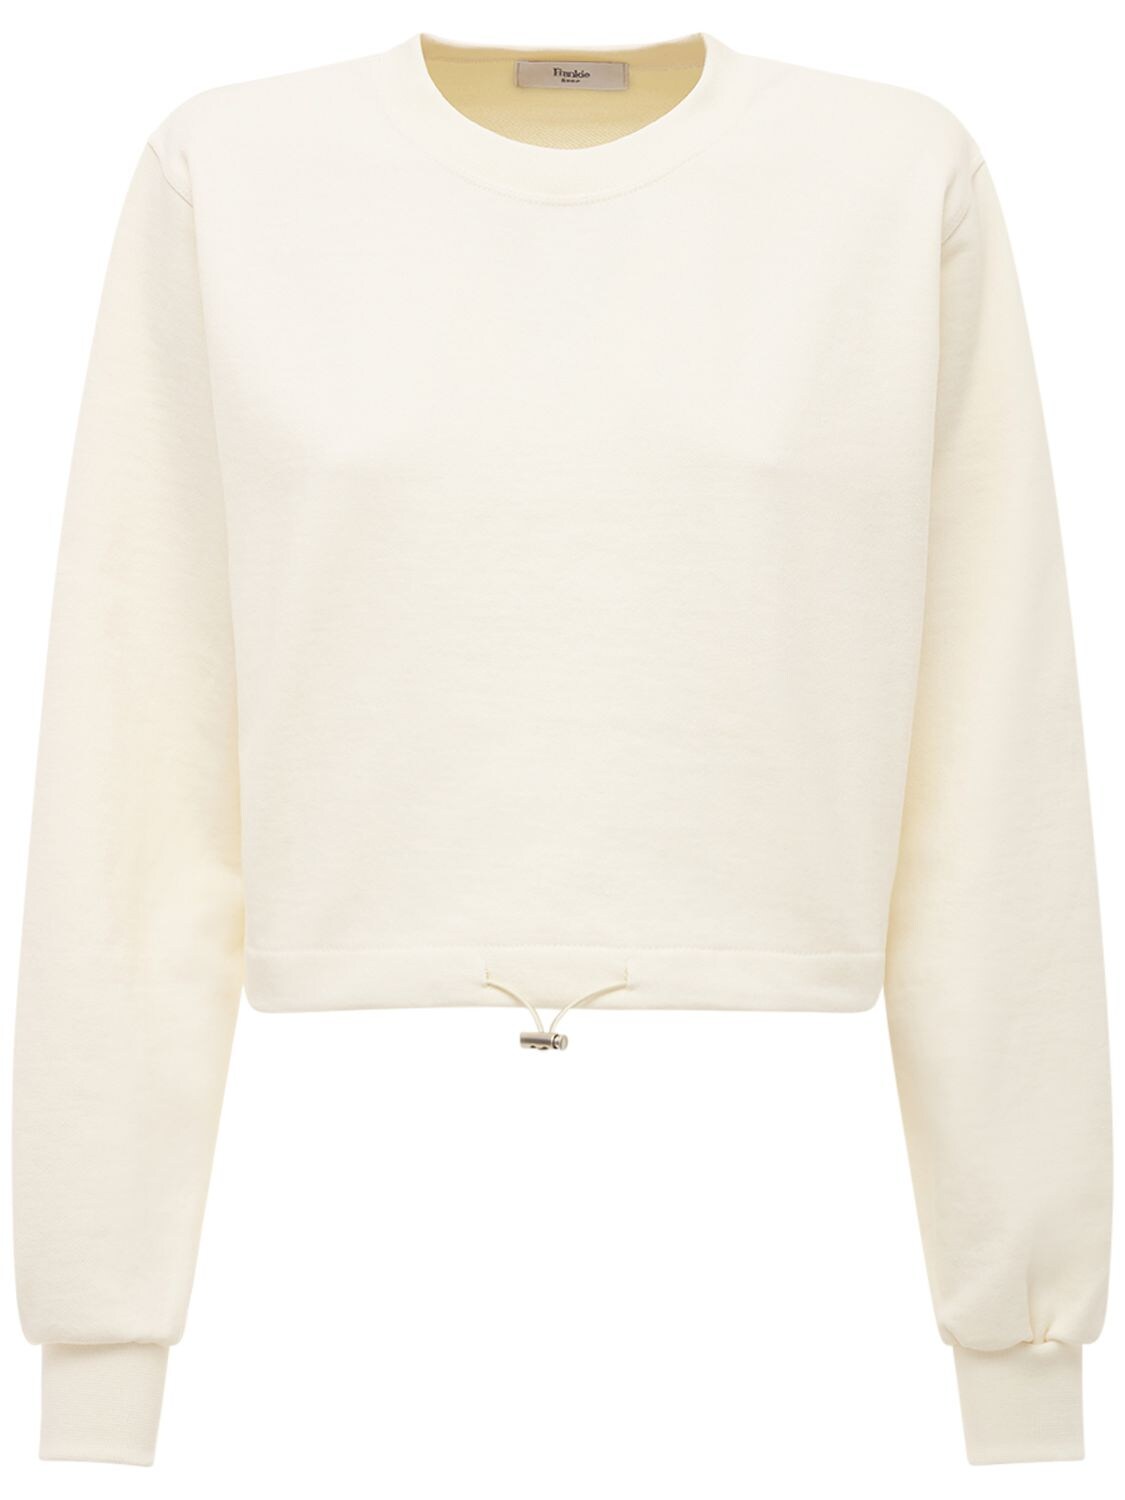 The Frankie Shop Cotton Jersey Sweatshirt W/shoulder Pads In Beige